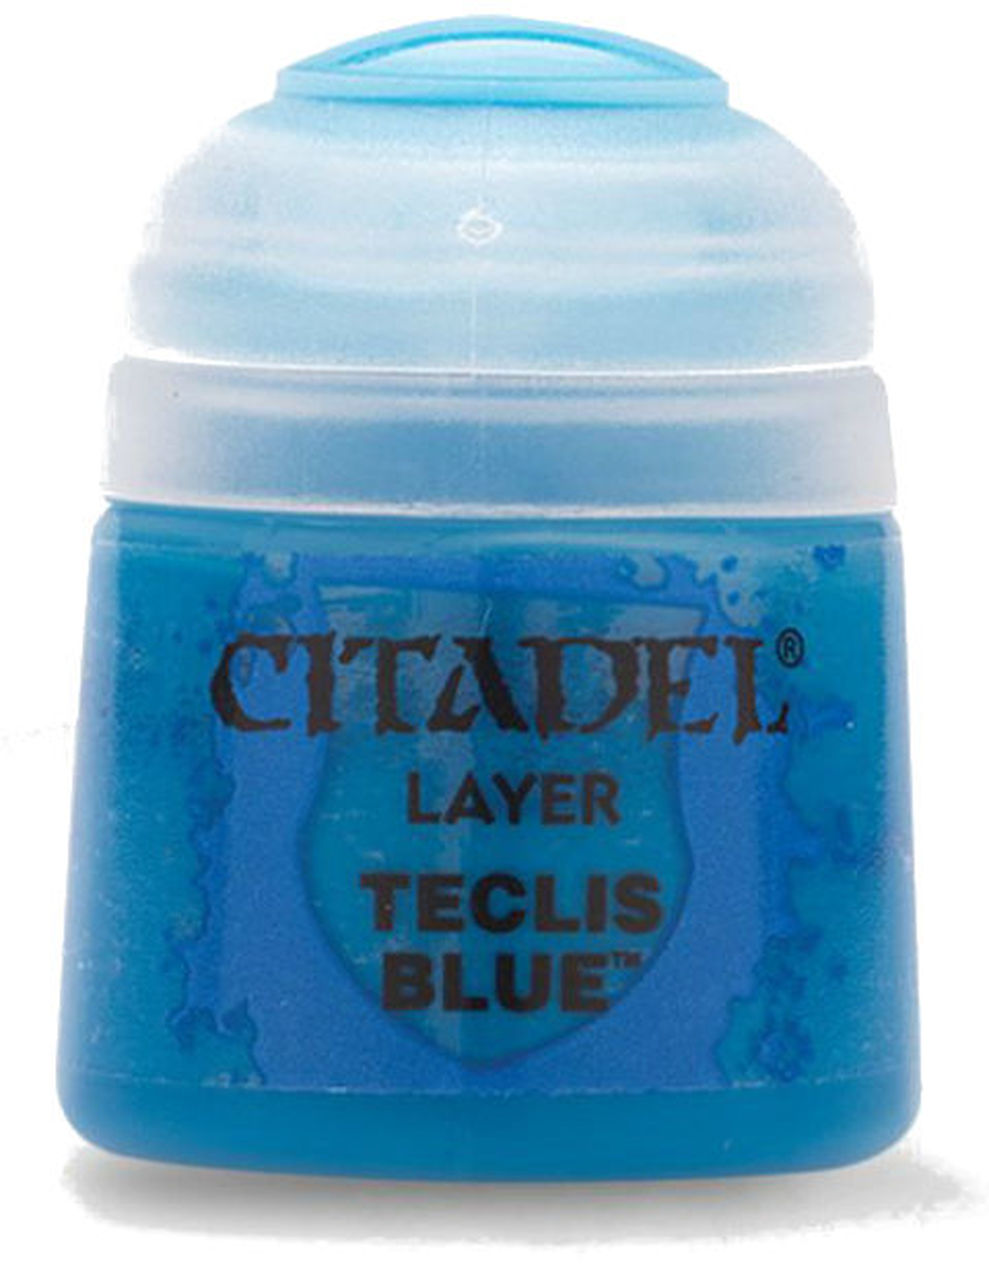 Citadel Paint Layer - Teclis Blue